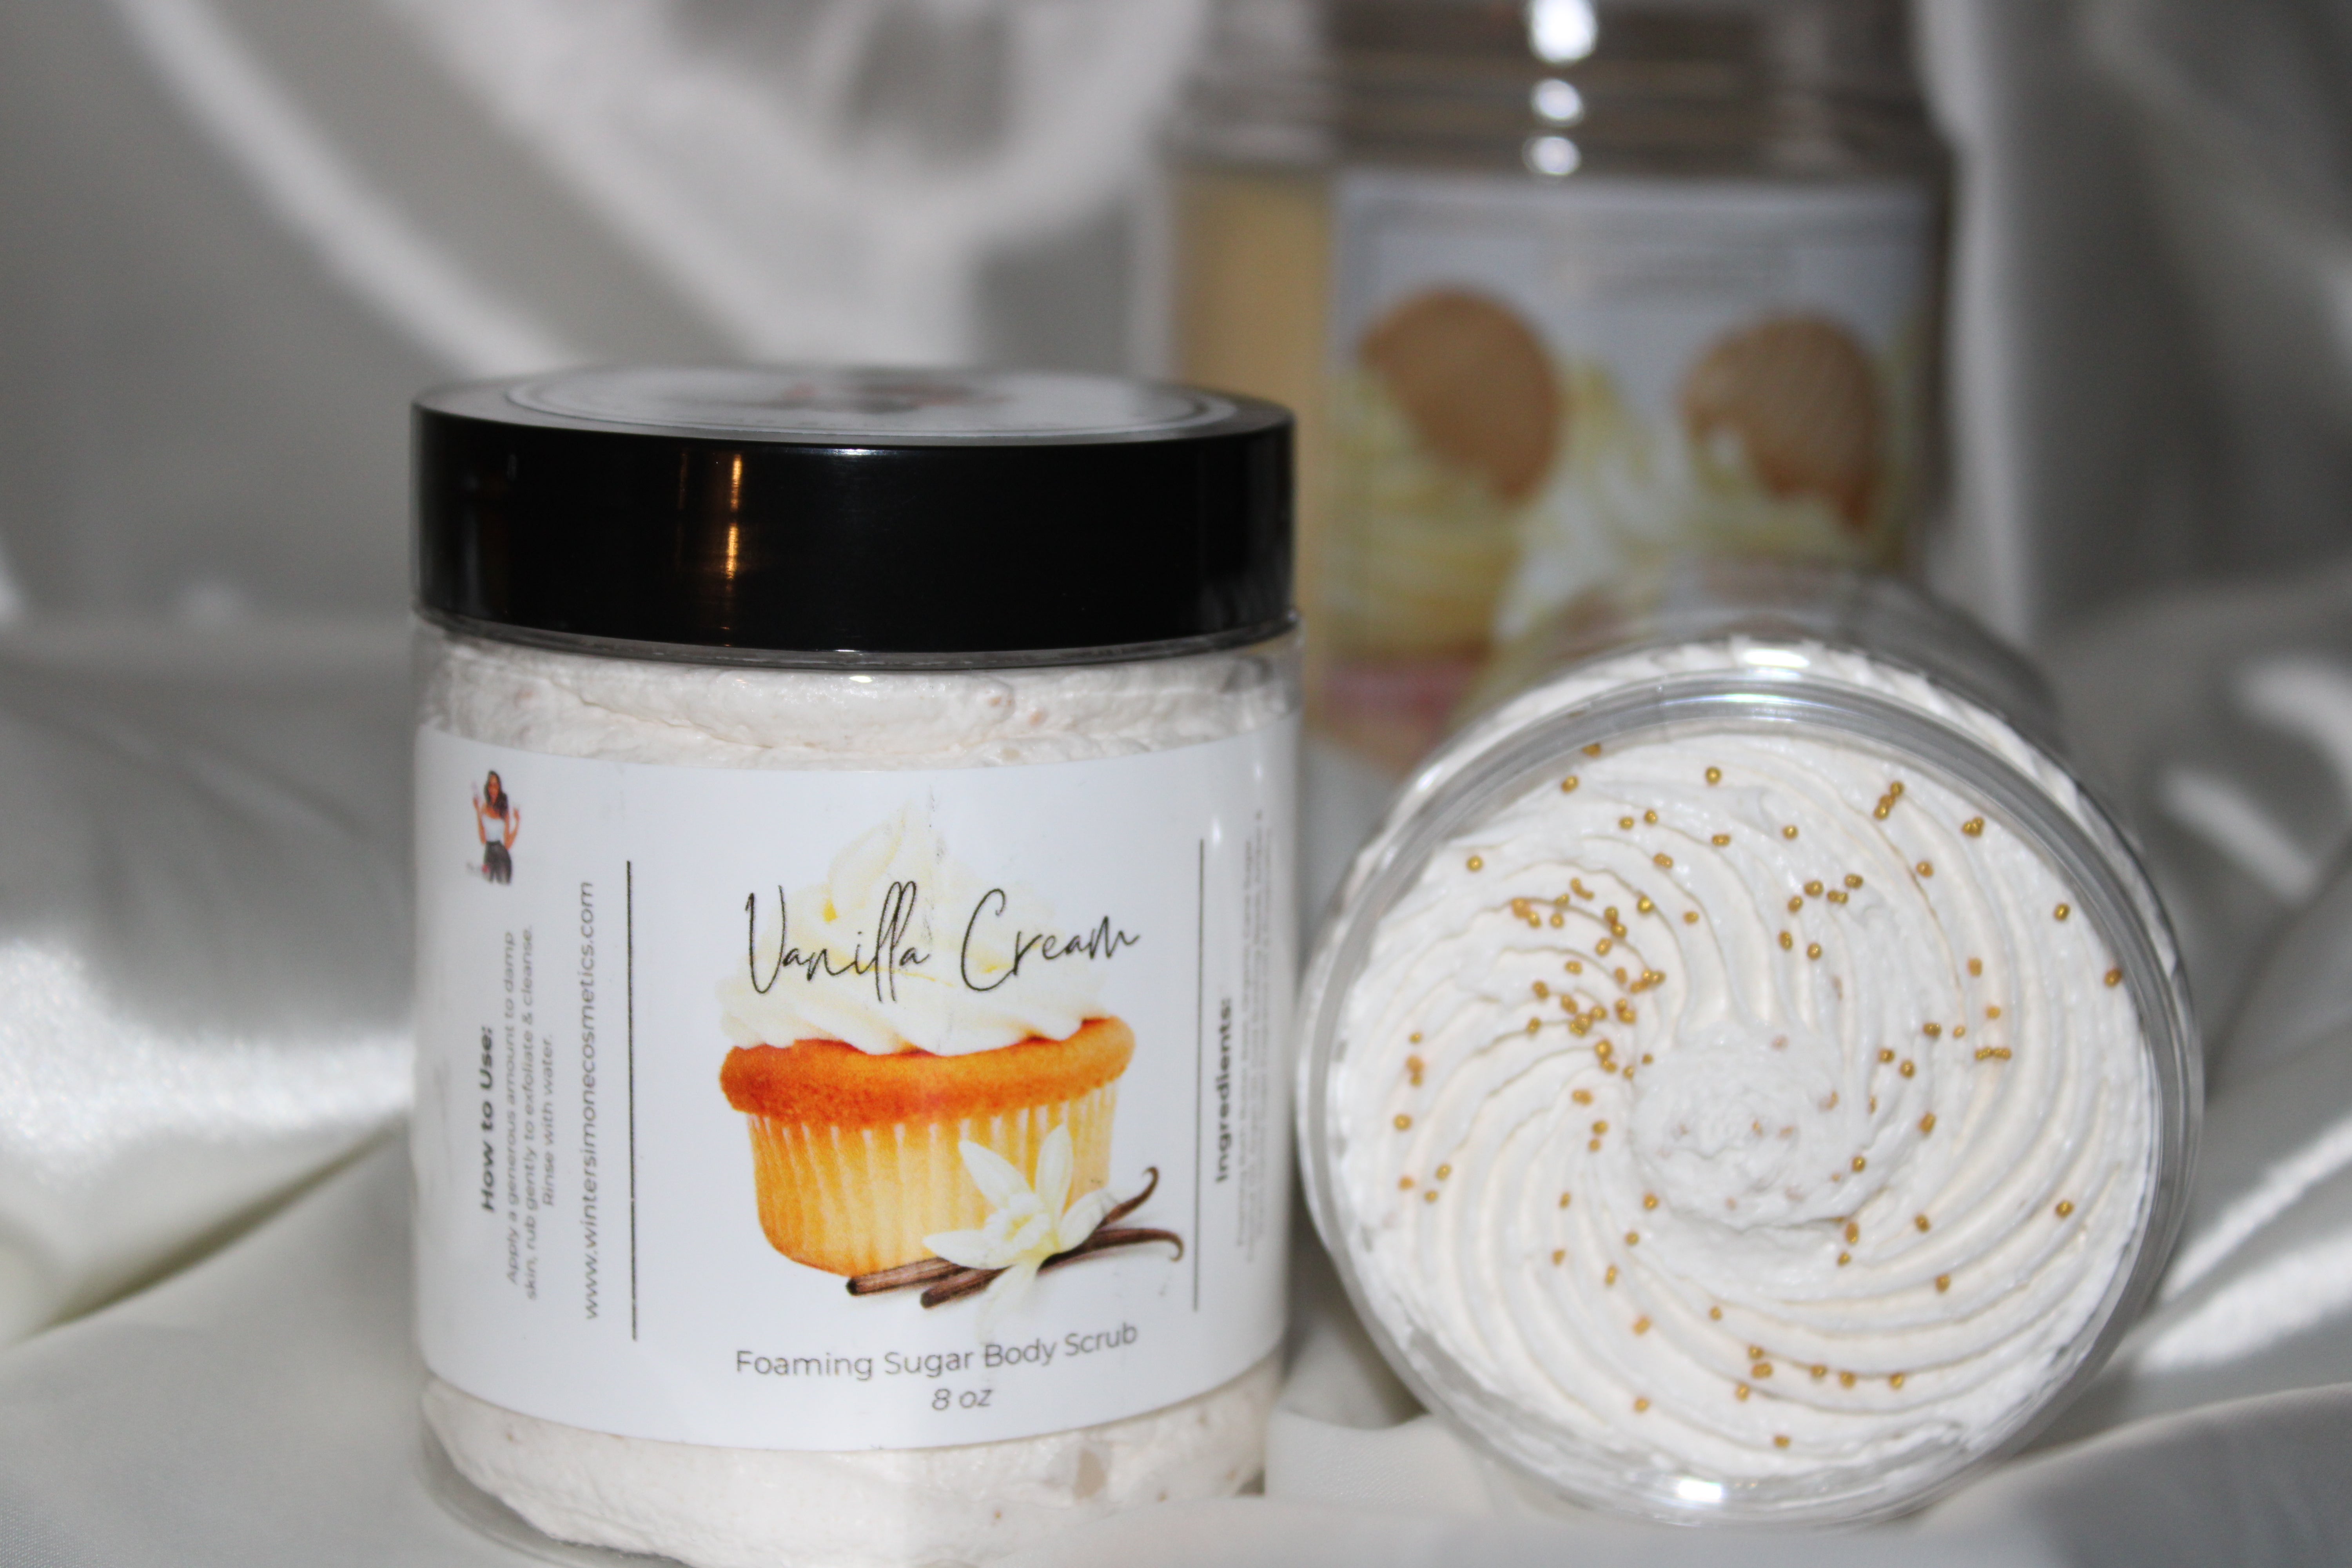 “Vanilla Cream” Foaming Sugar Body Scrub 8 oz